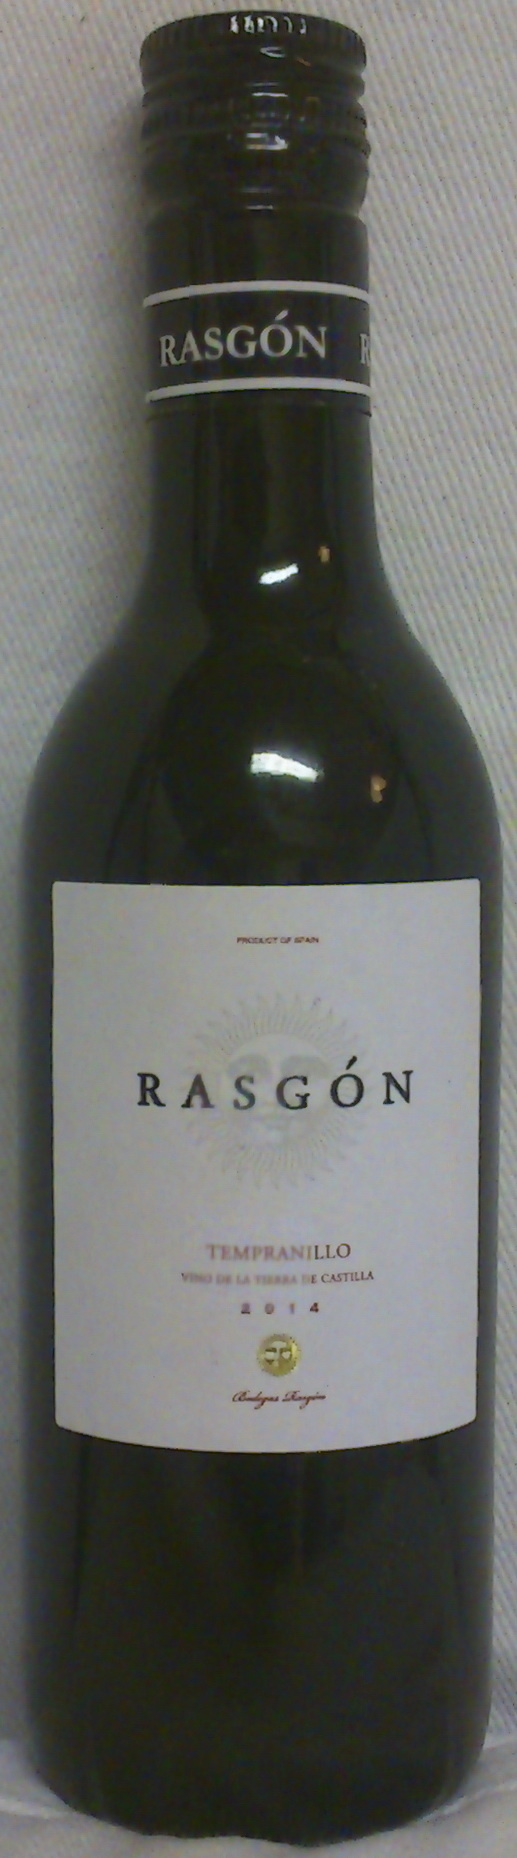 Vino Rasgón - Product - es